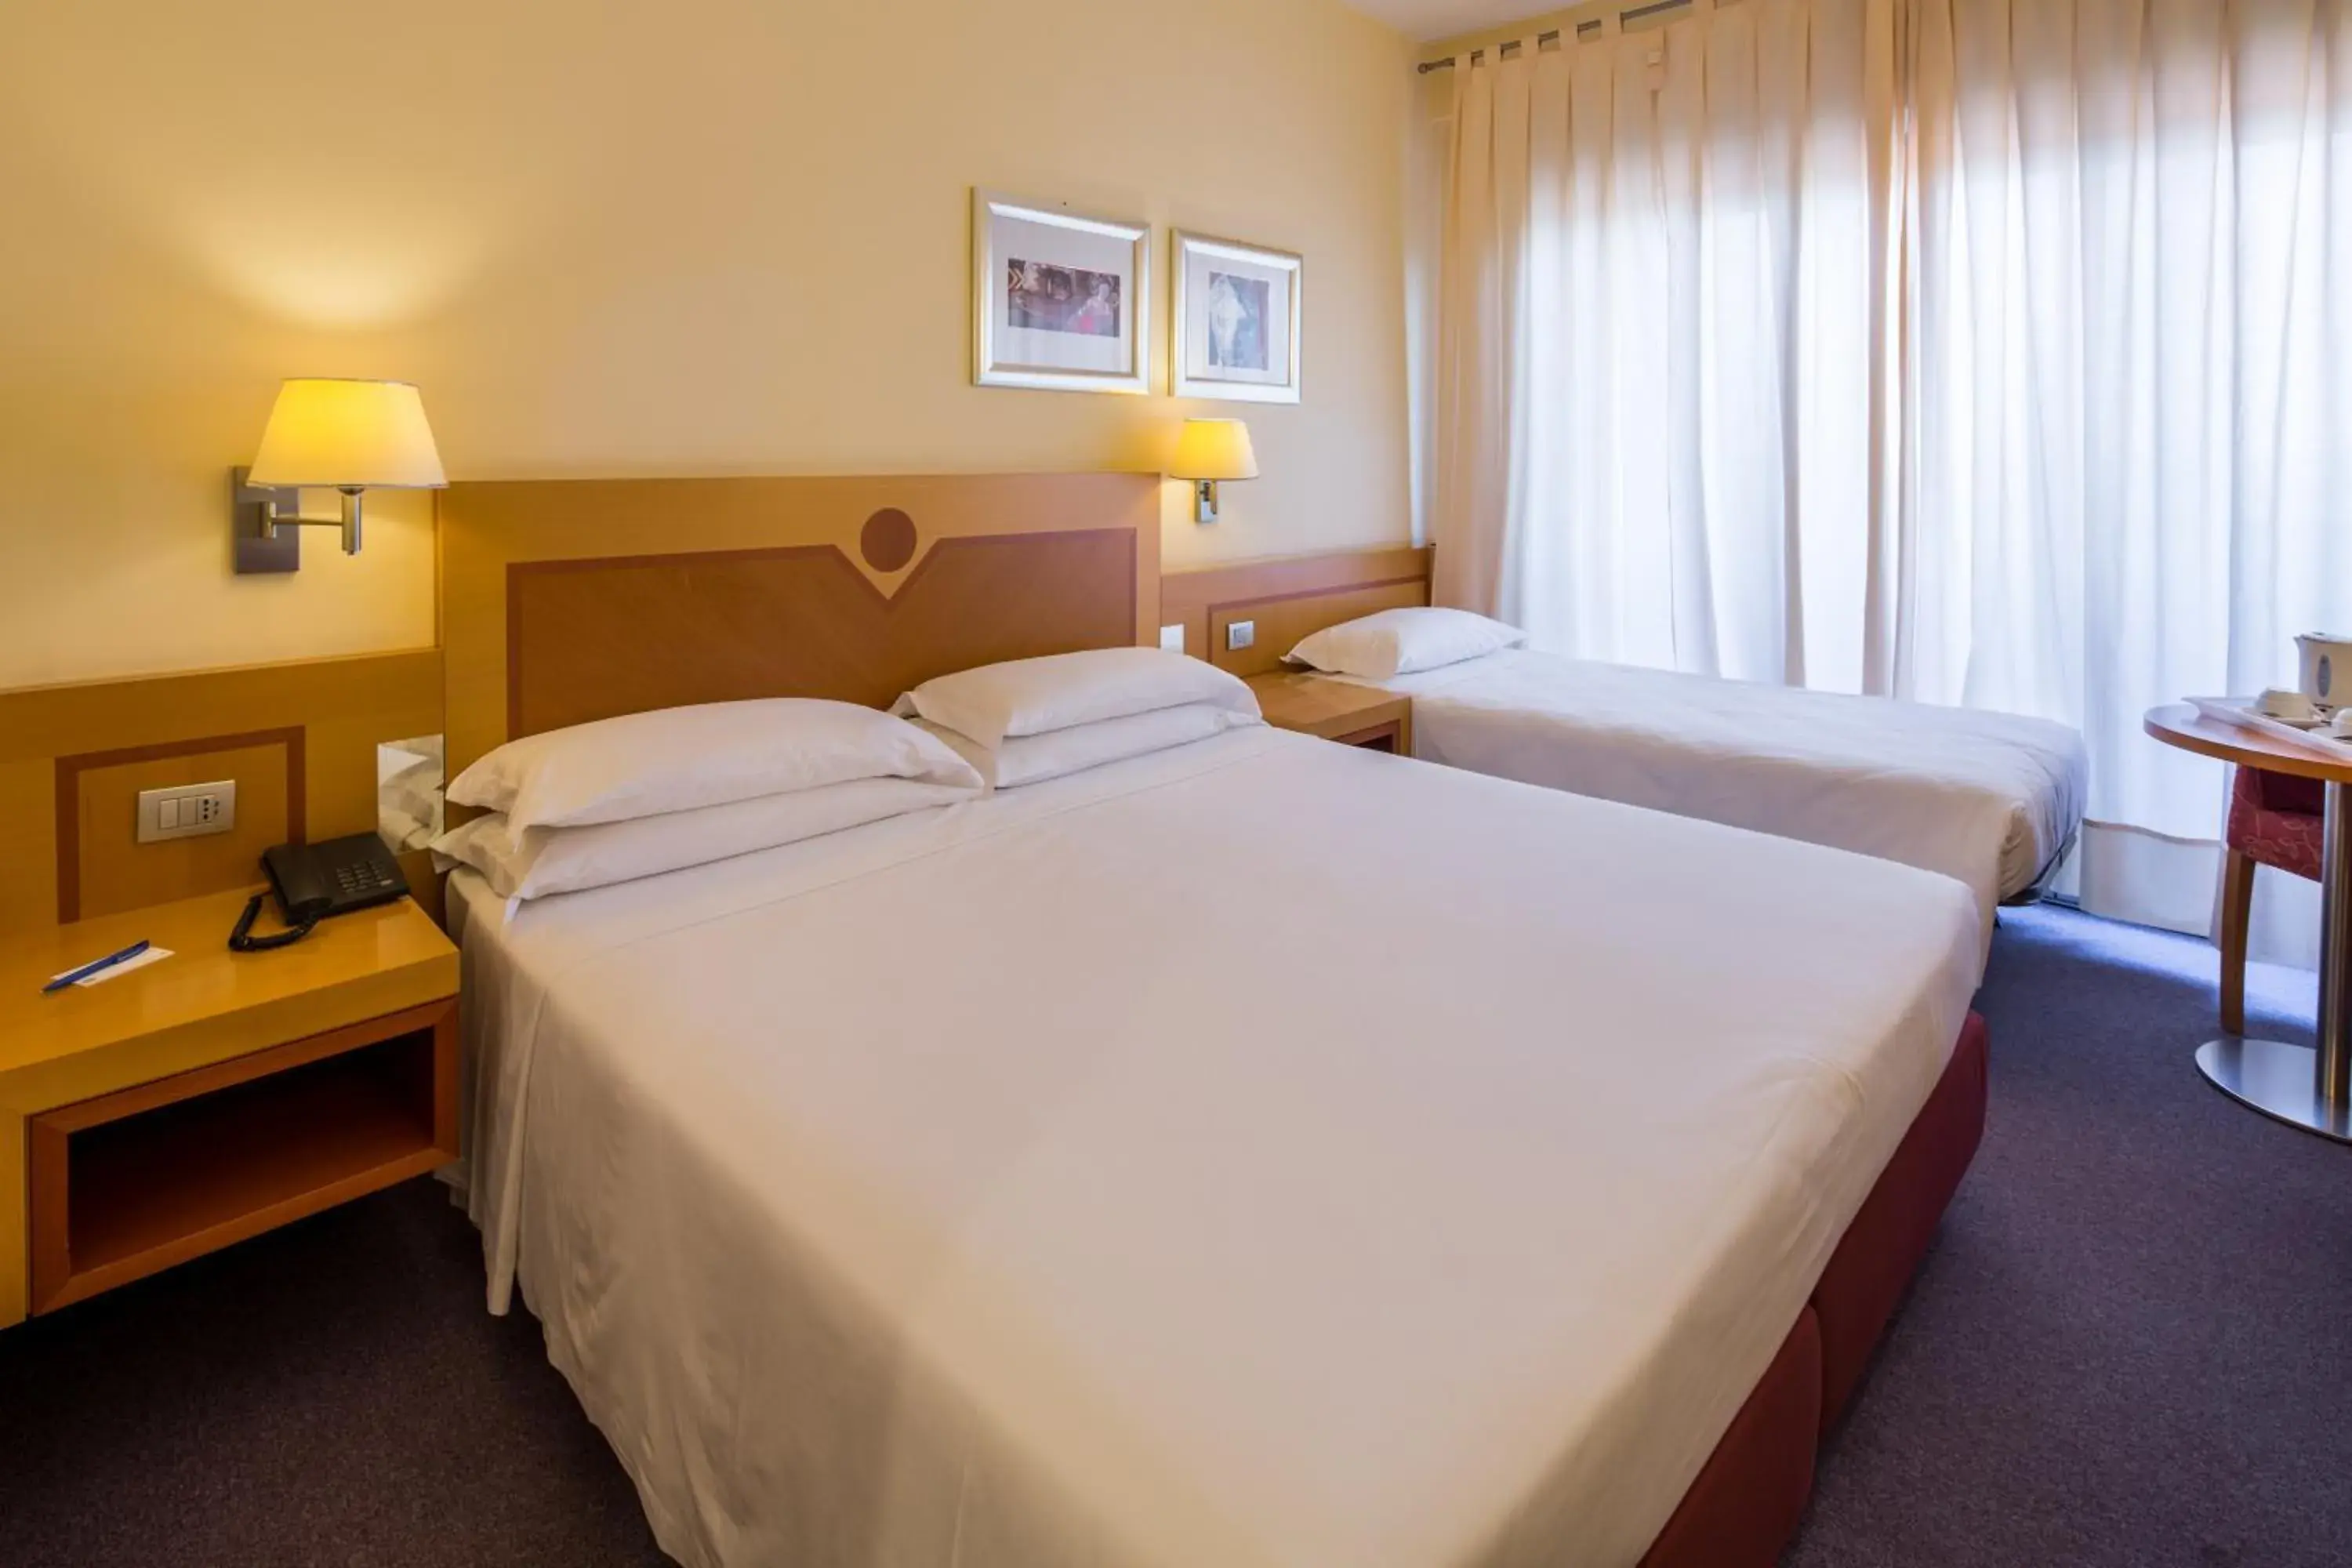 Bed, Room Photo in Best Western Hotel I Triangoli